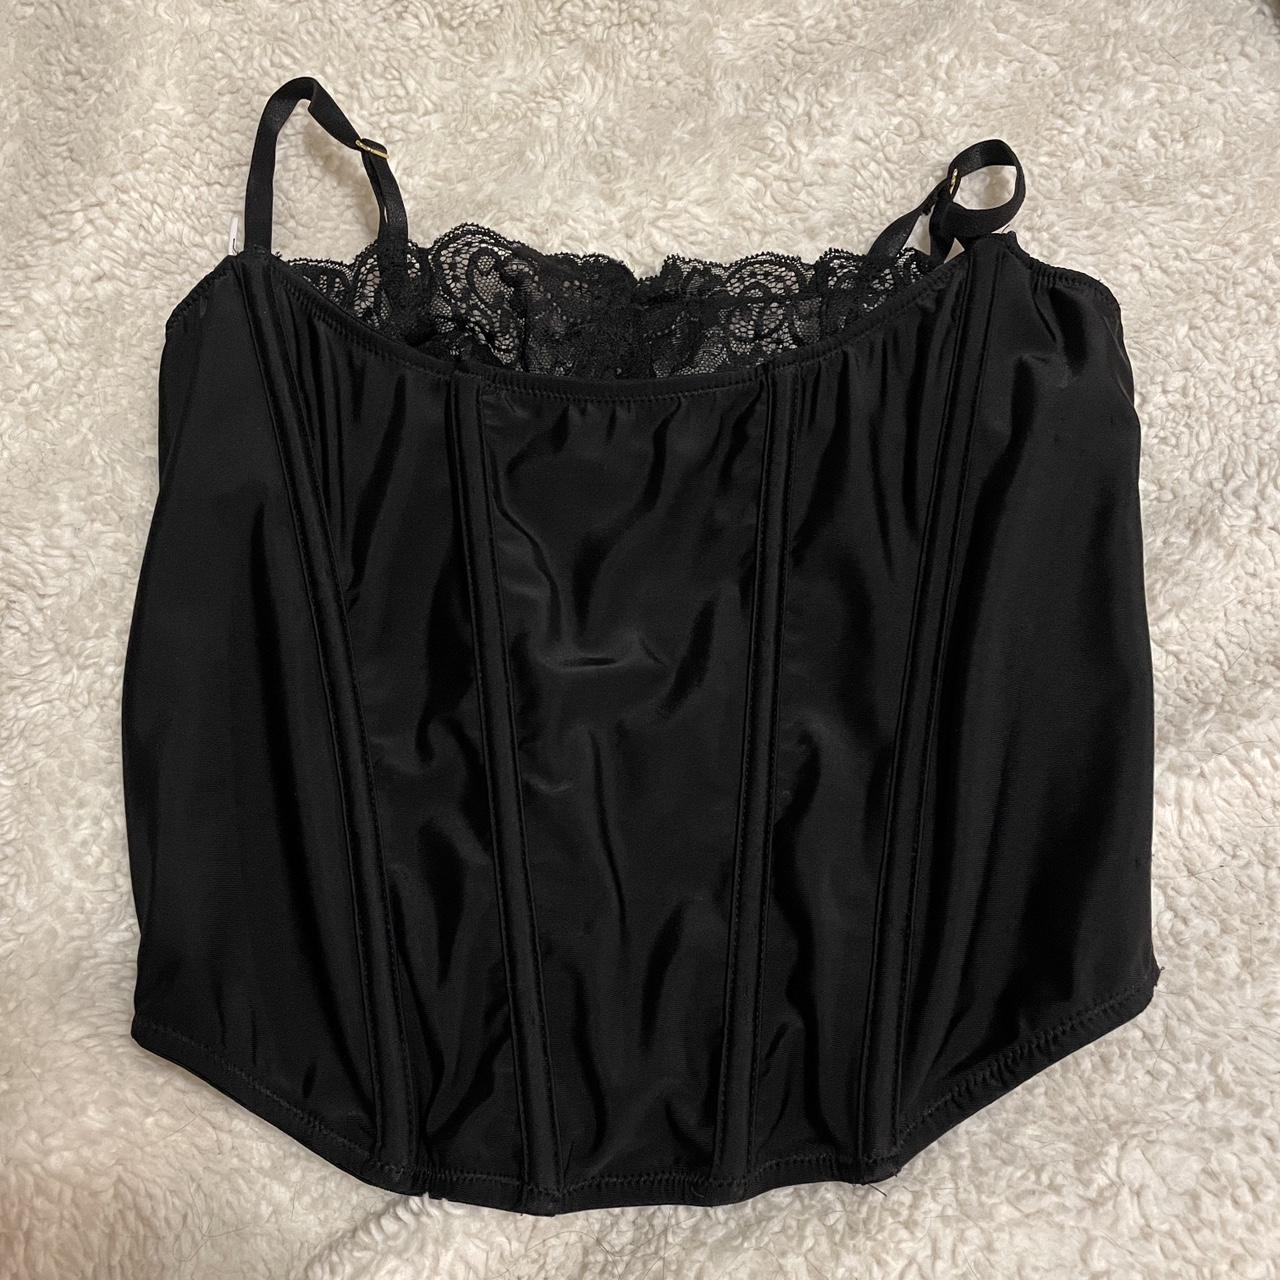 Black corset with lace bra detail. - Depop